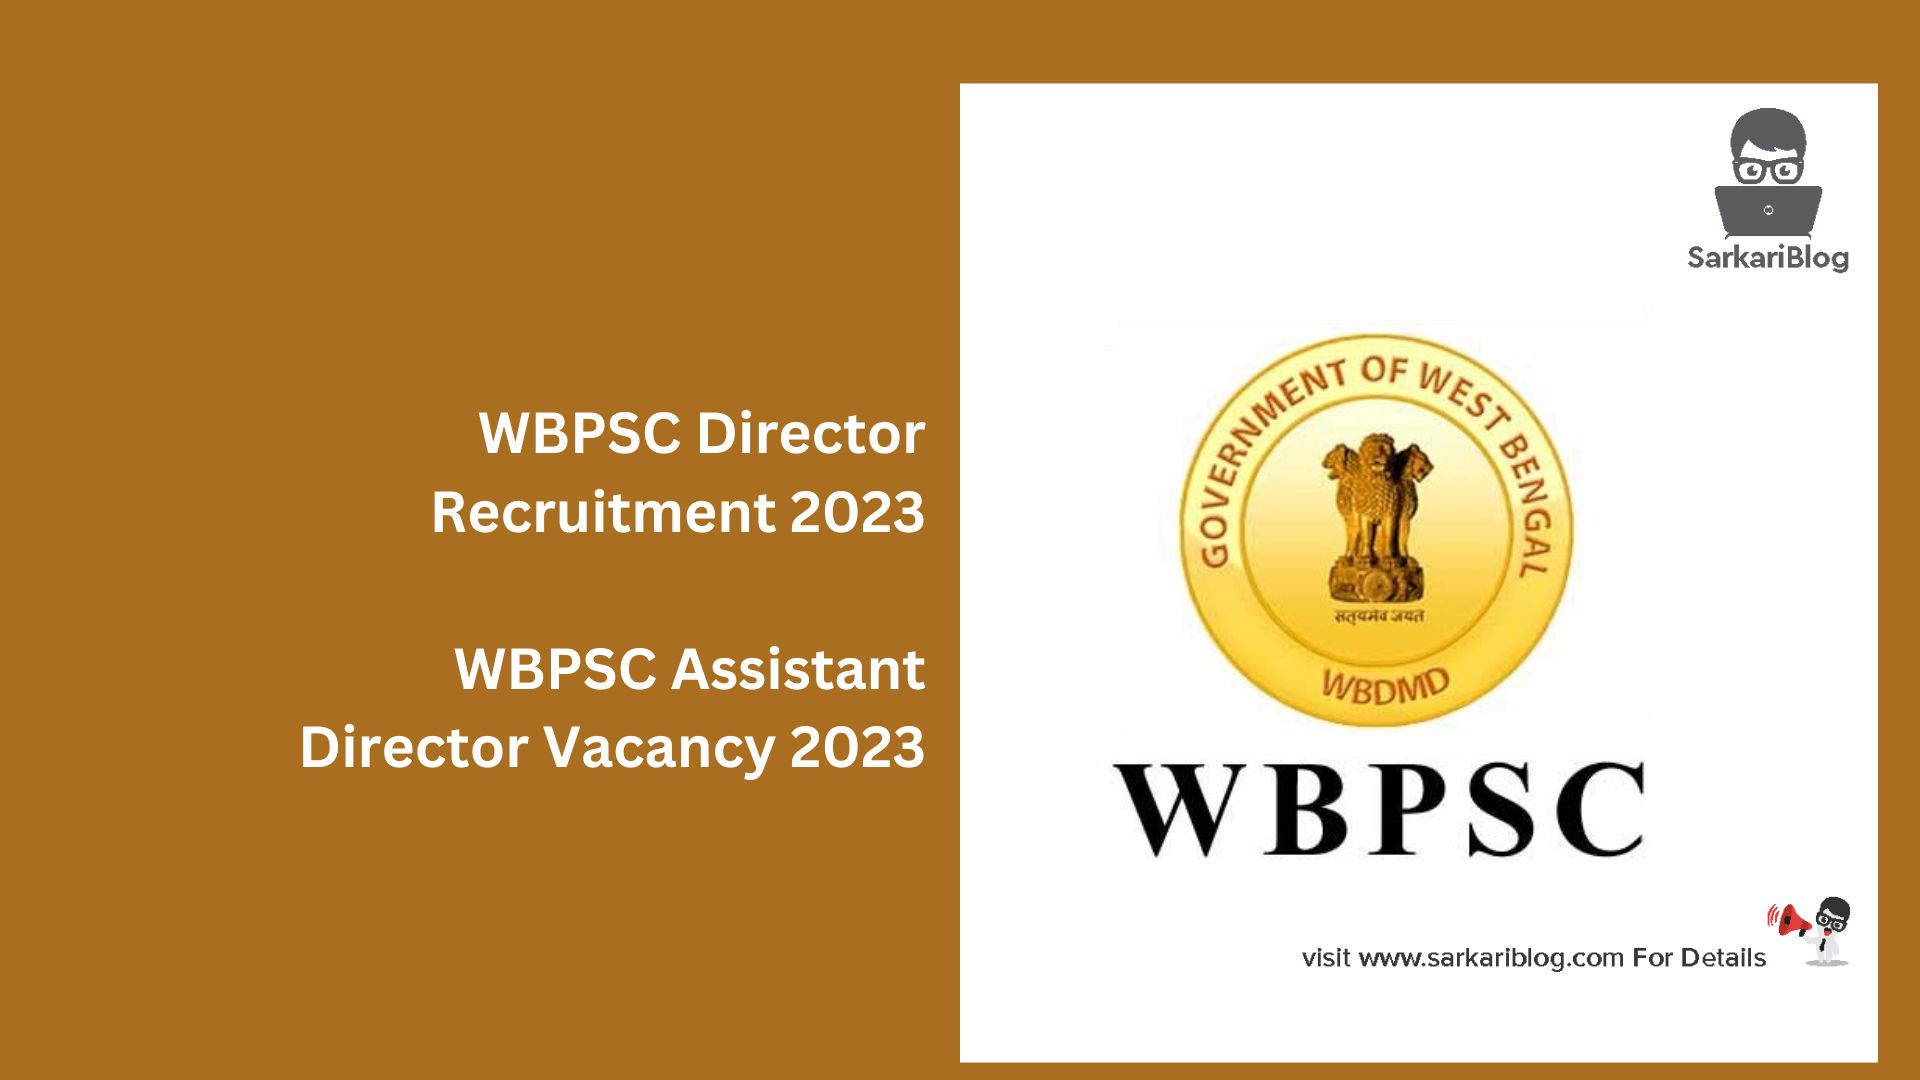 WBPSC Director Recruitment 2023